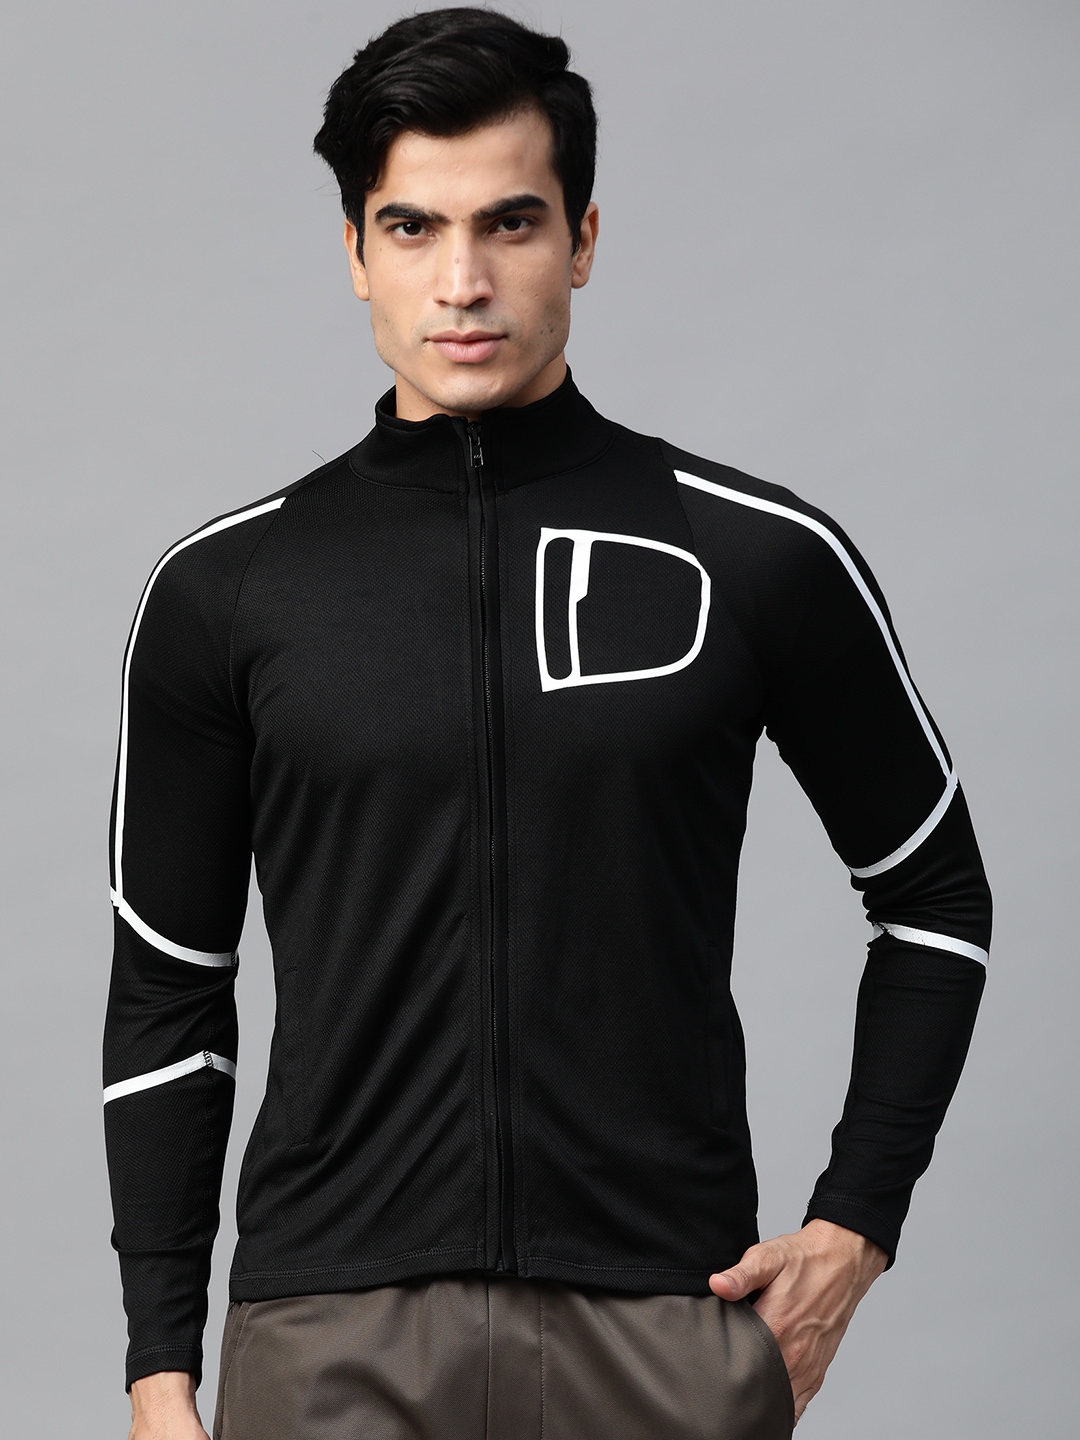 Buy Fitkin Men Black & White Printed Detail Training Jacket - Jackets ...